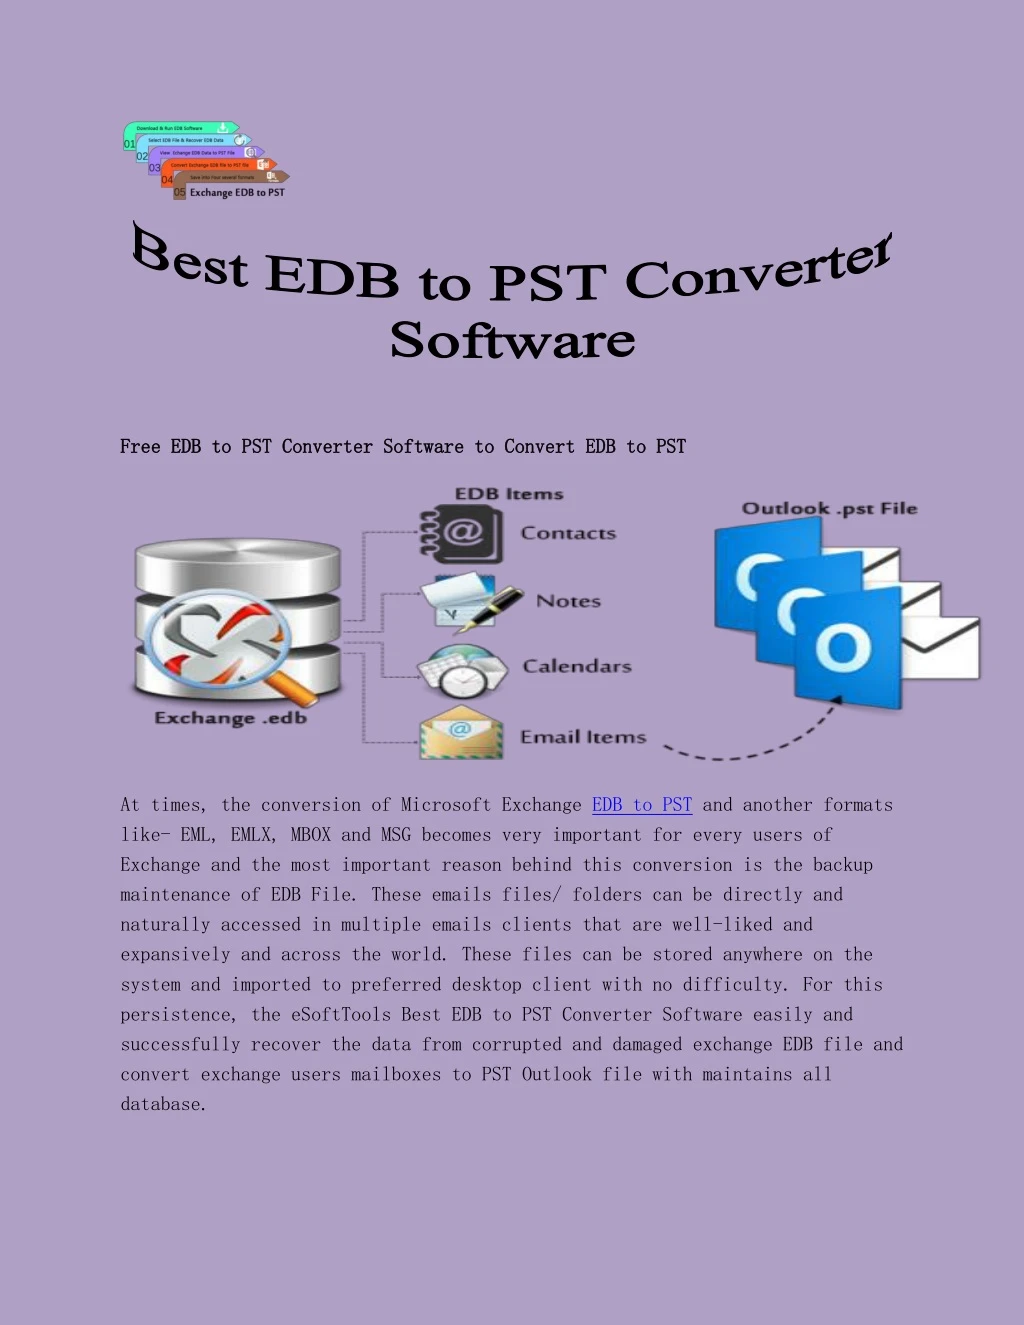 free edb to pst converter software to convert